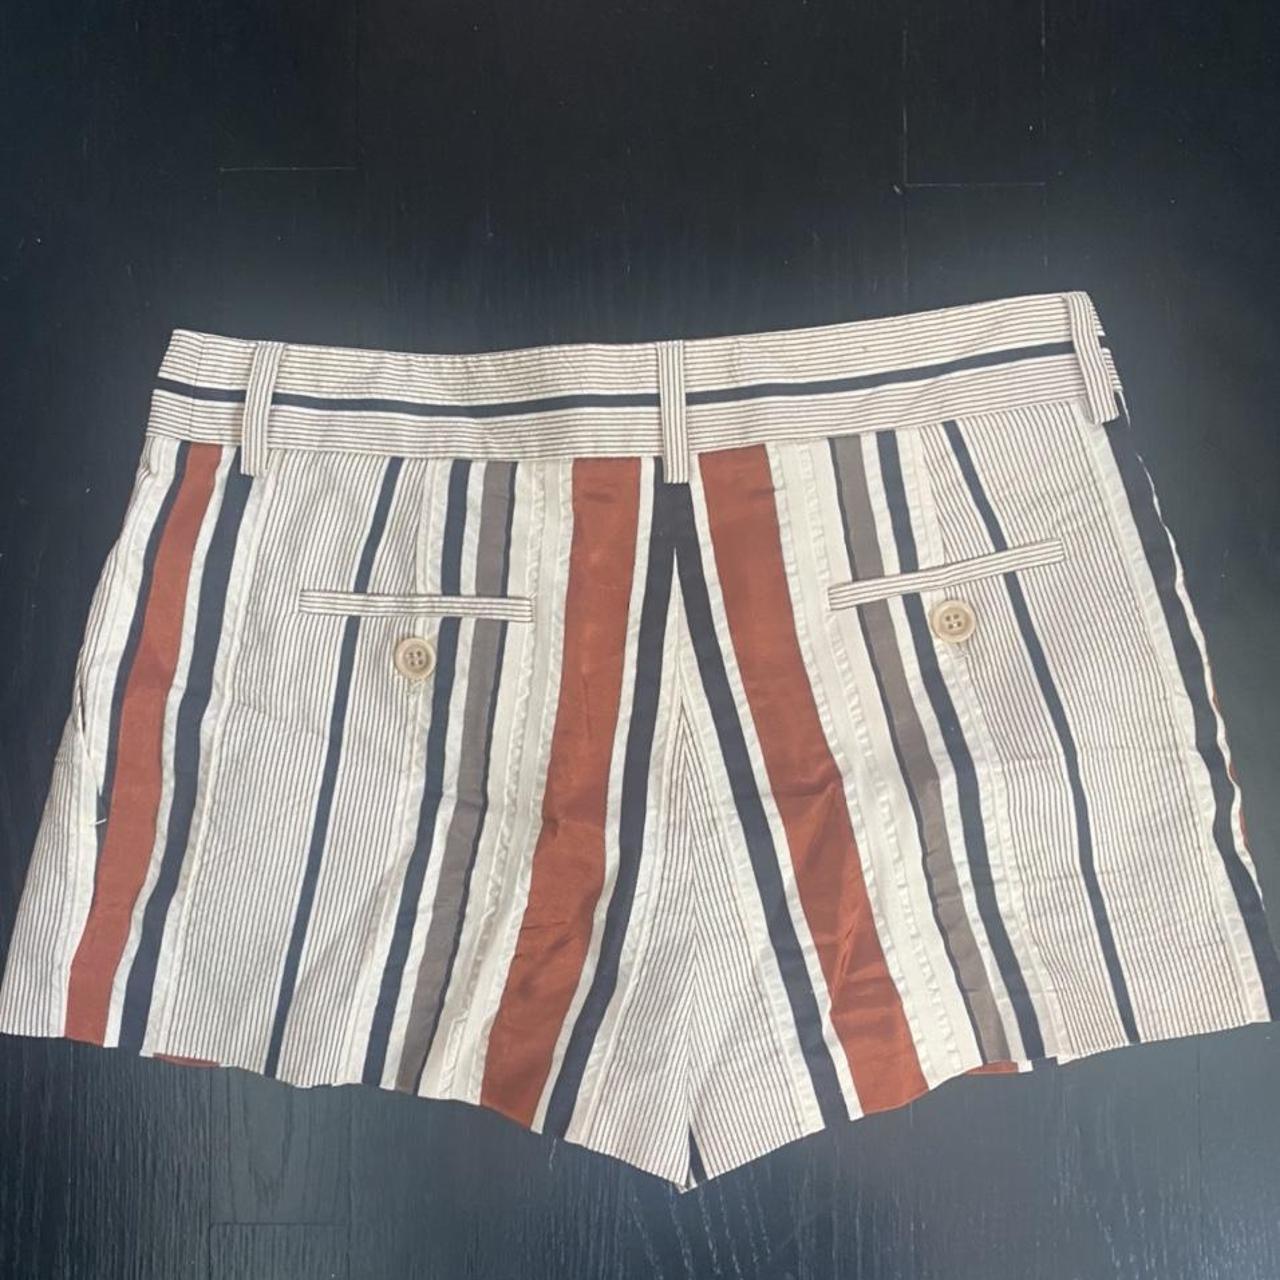 Moschino Cheap & Chic Women's Tan and Orange Shorts (3)